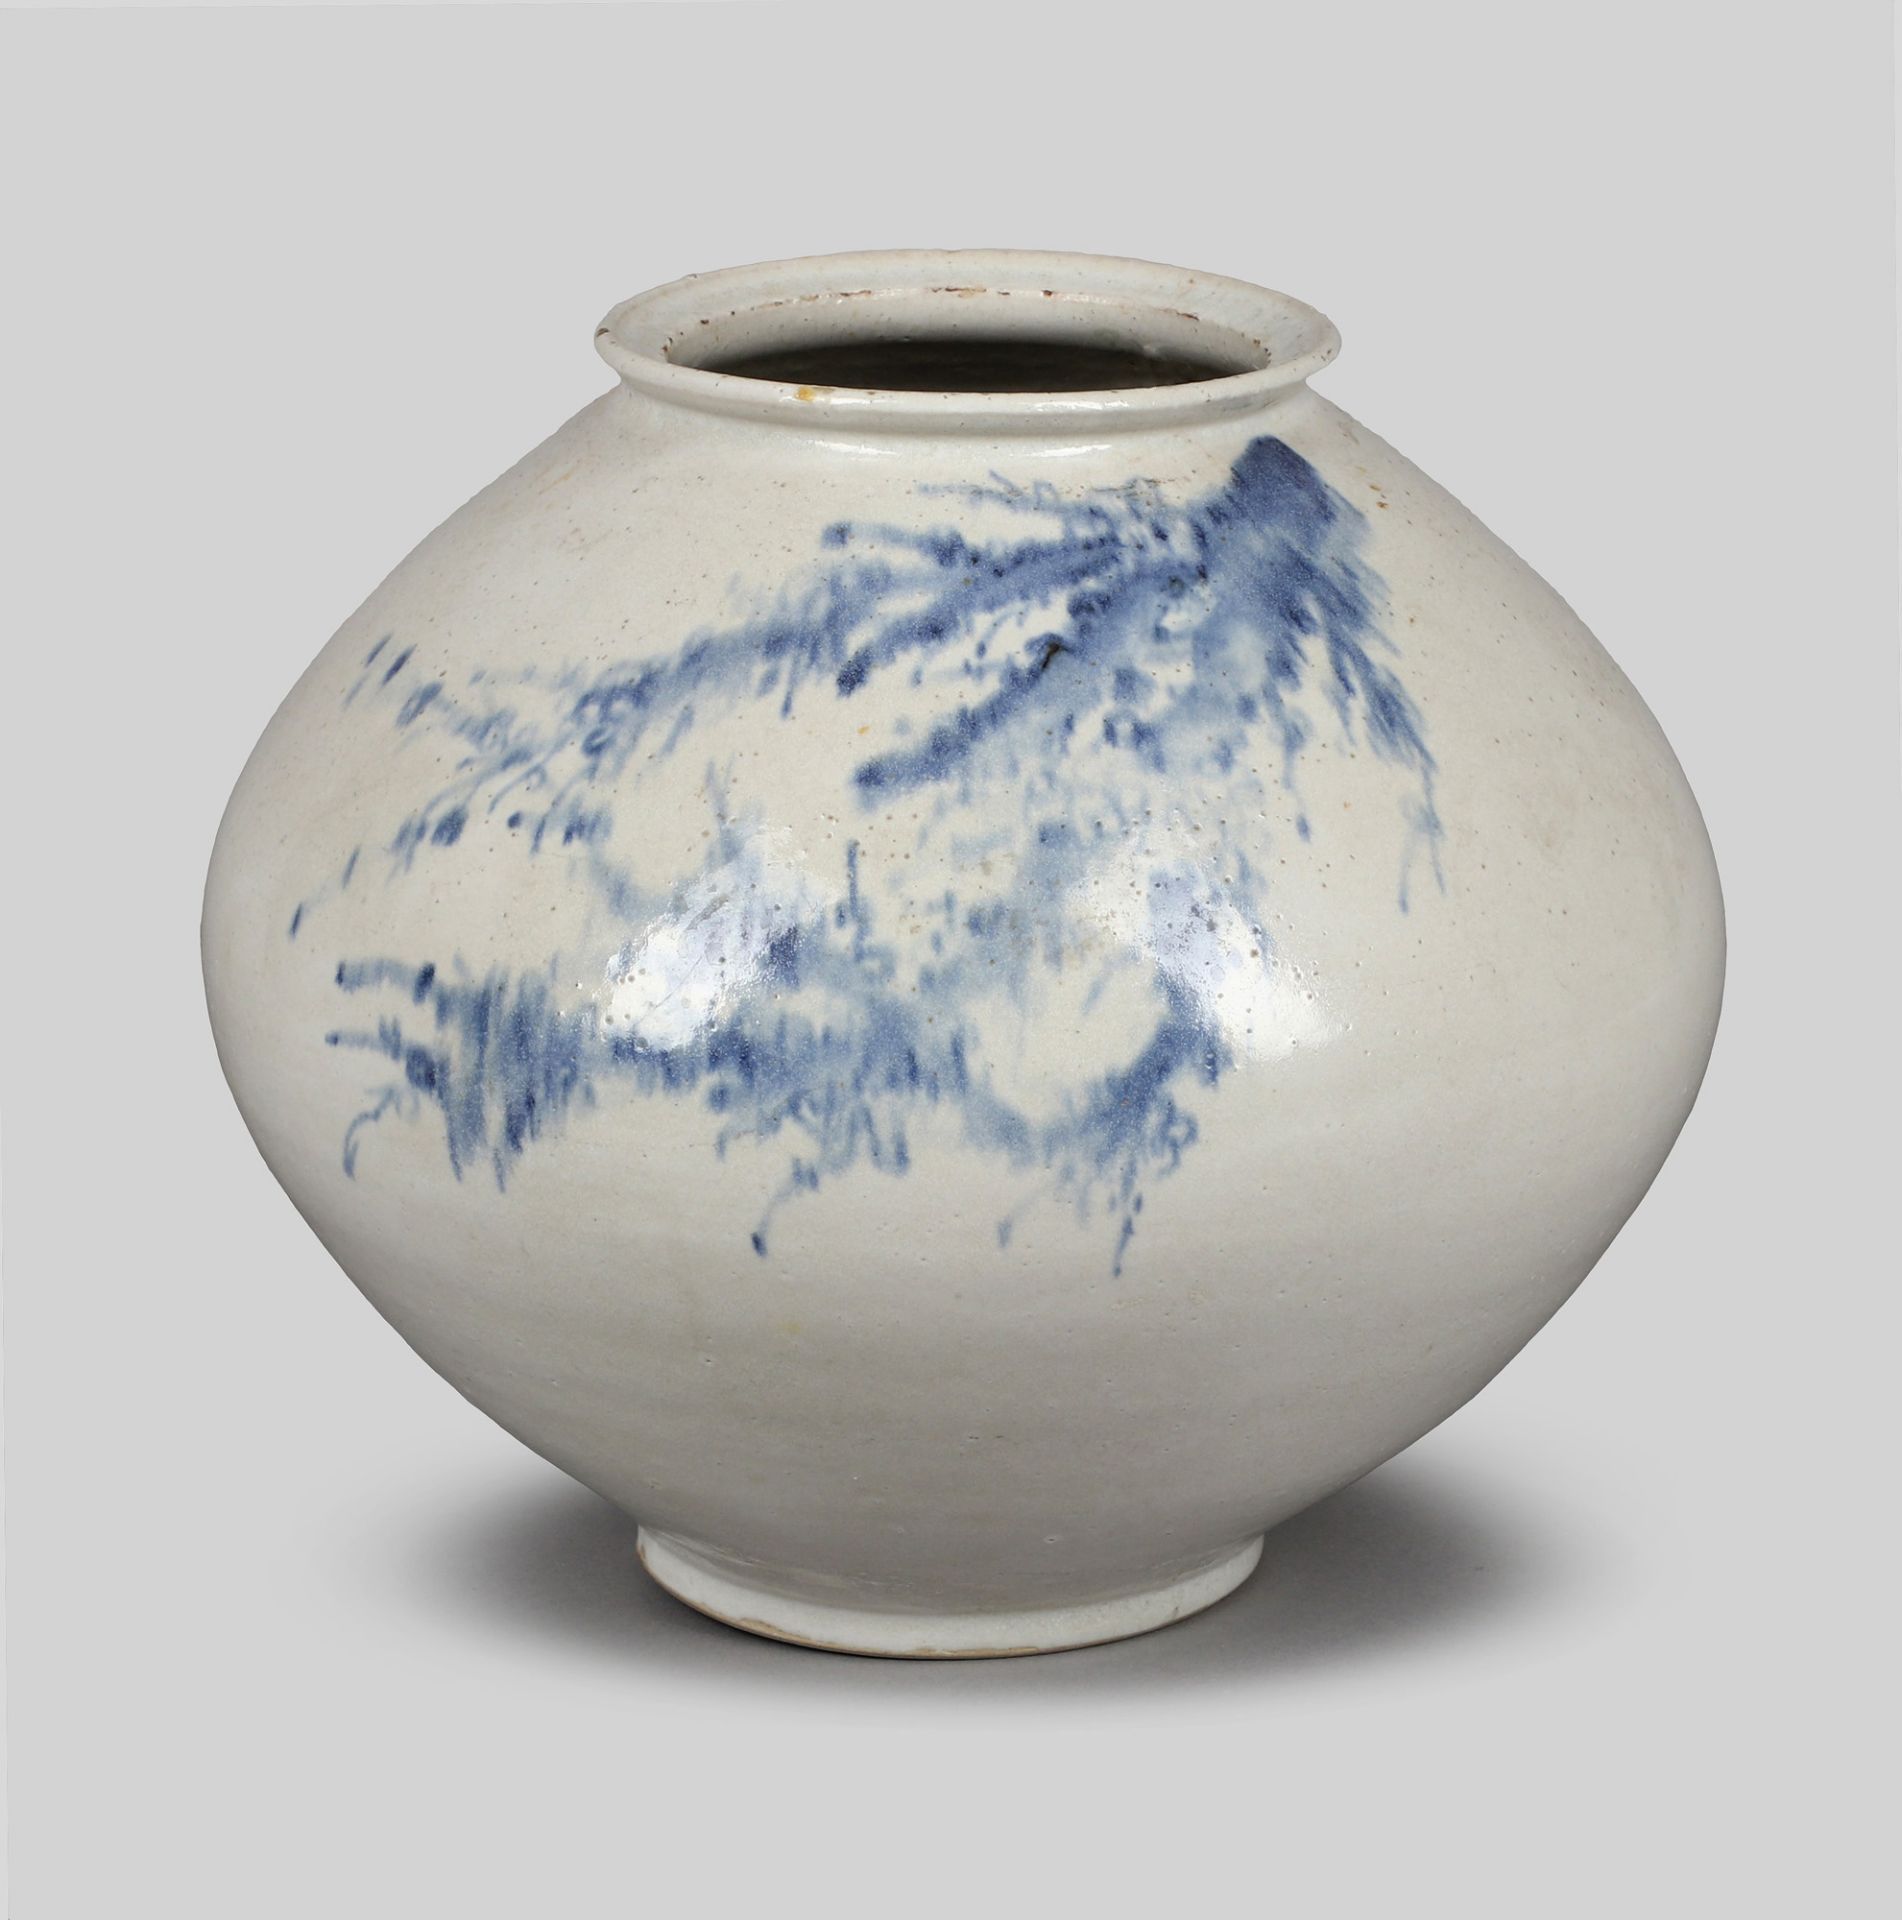 Vase, Korea, um 1900, Steinzeug